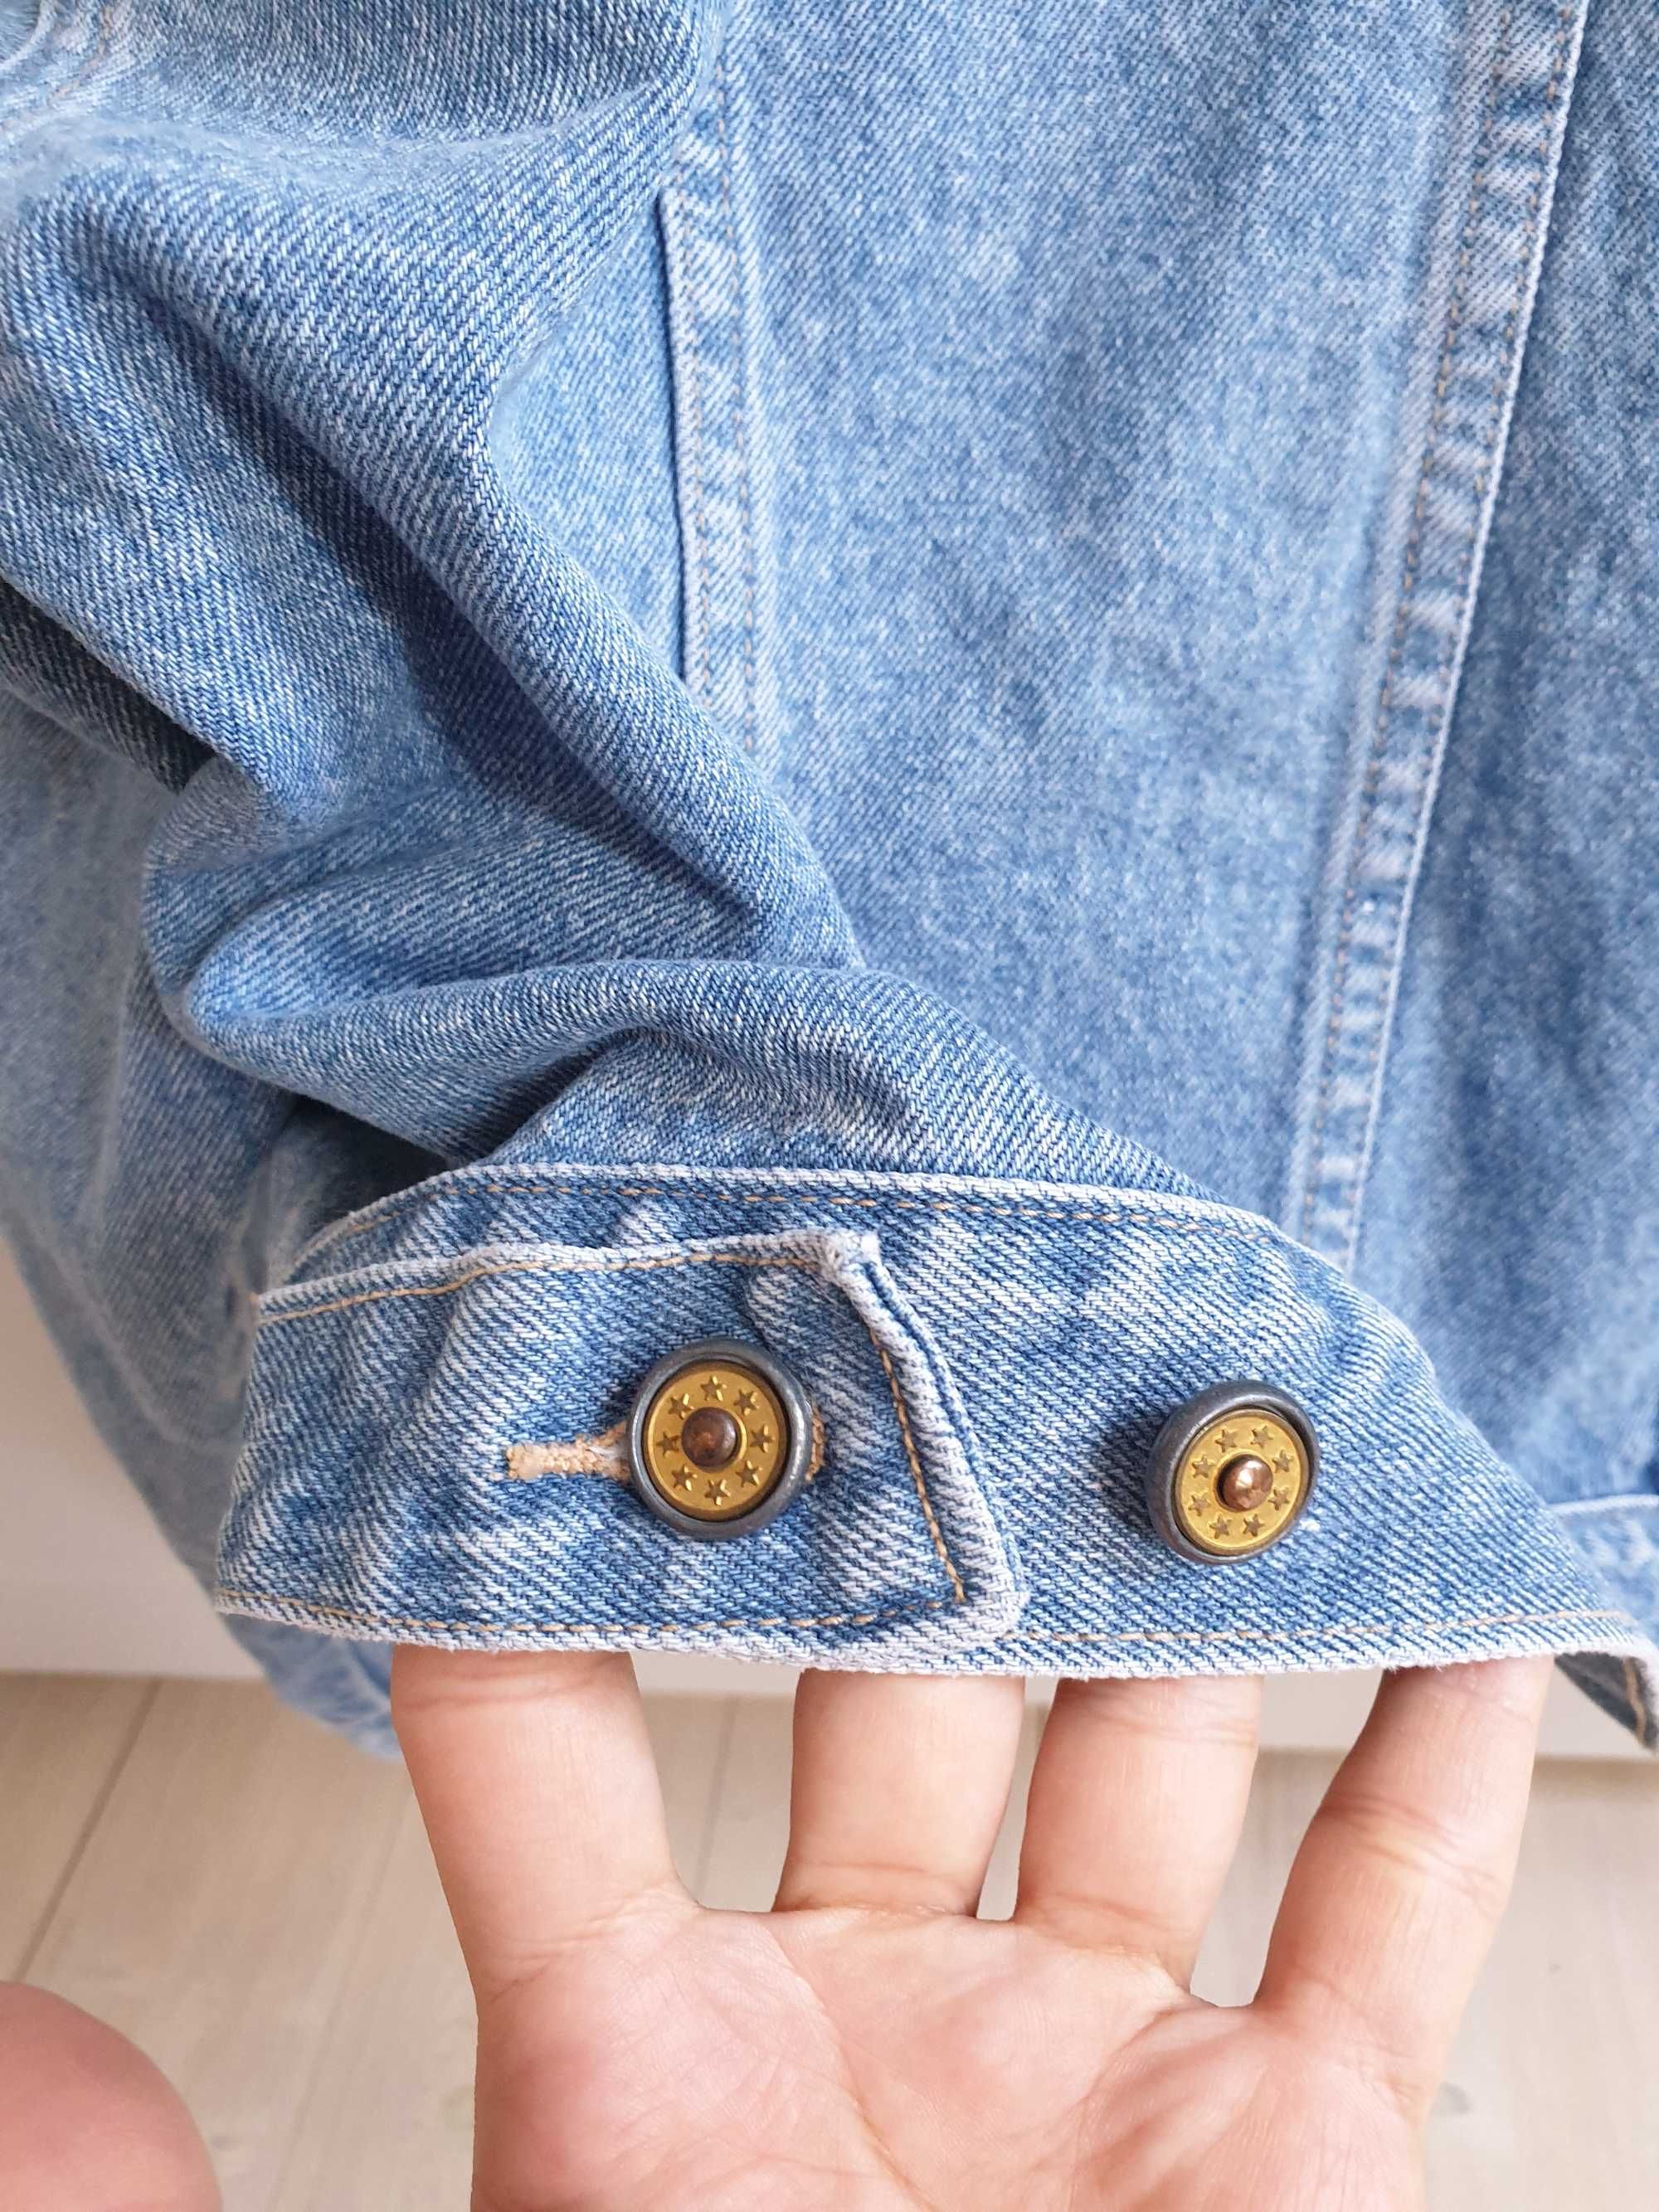 Bluza katana dżinsowa vintage jeansowa 42 44 oversize